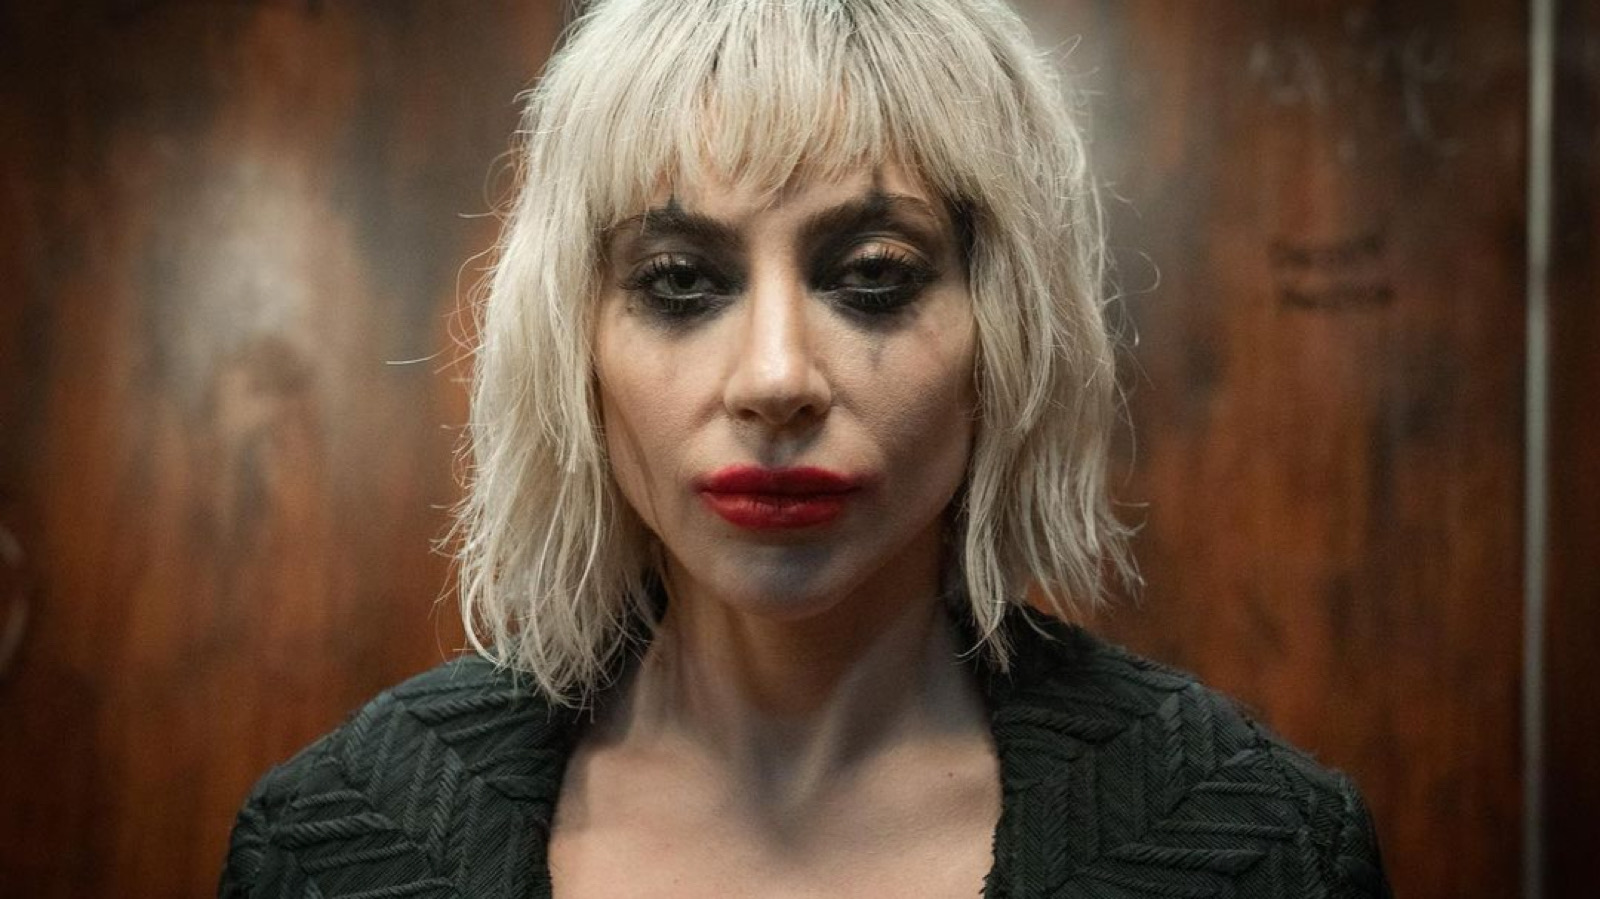 Joker Folie à Deux, riprese concluse: nuova foto di Lady Gaga nel ruolo di Harley Quinn